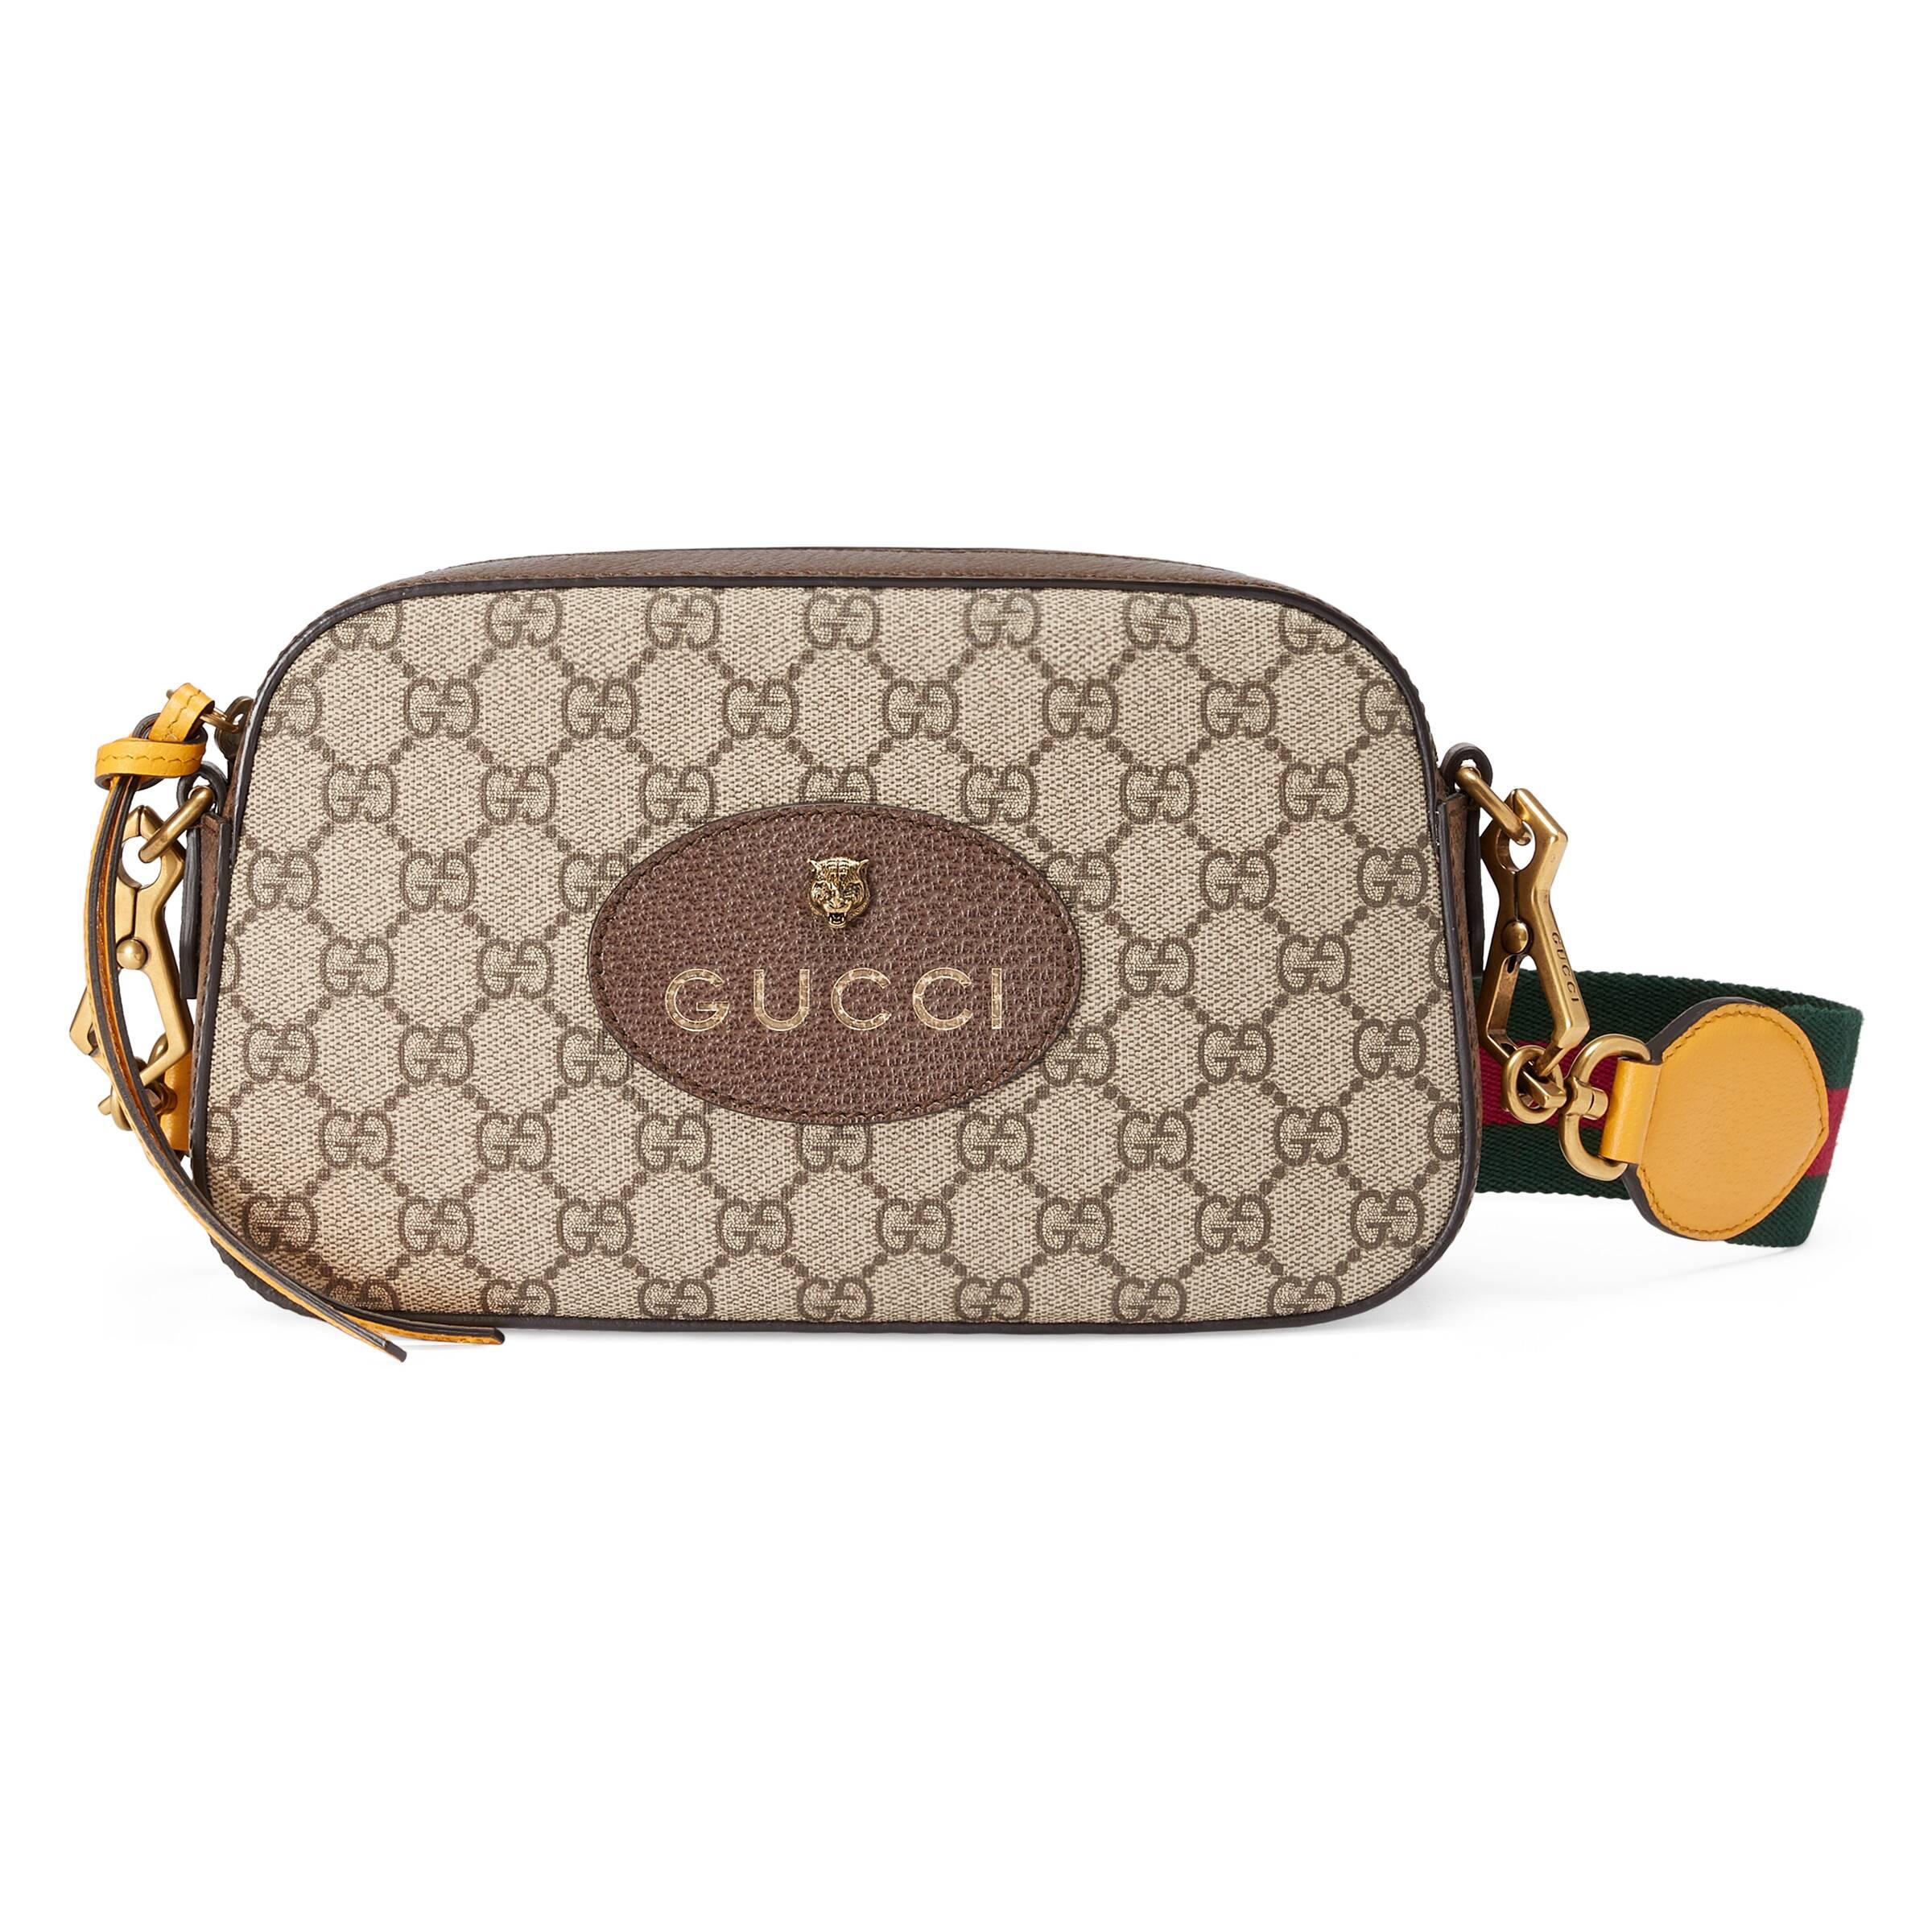 Gucci Canvas Neo Vintage GG Supreme Messenger Bag in Beige (Natural) - Lyst